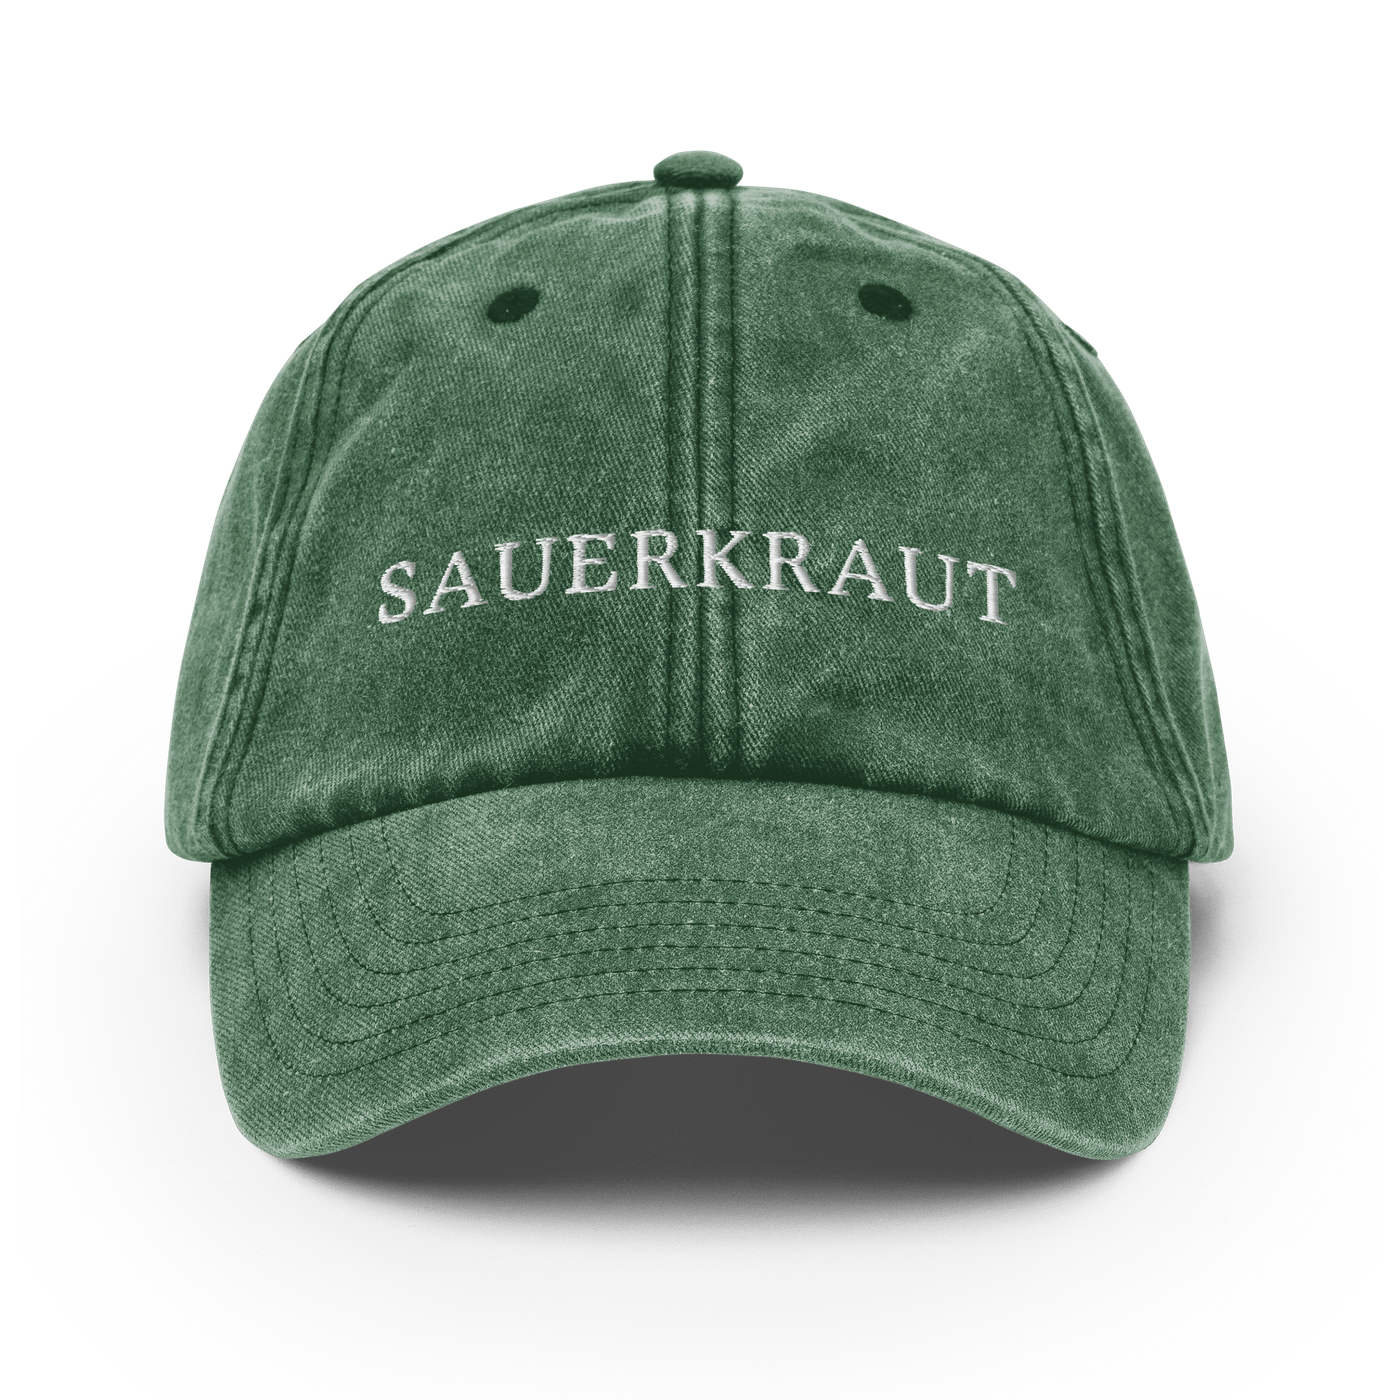 Sauerkraut Vintage Hat - Vintage Bottle Green - - Just Another Cap Store